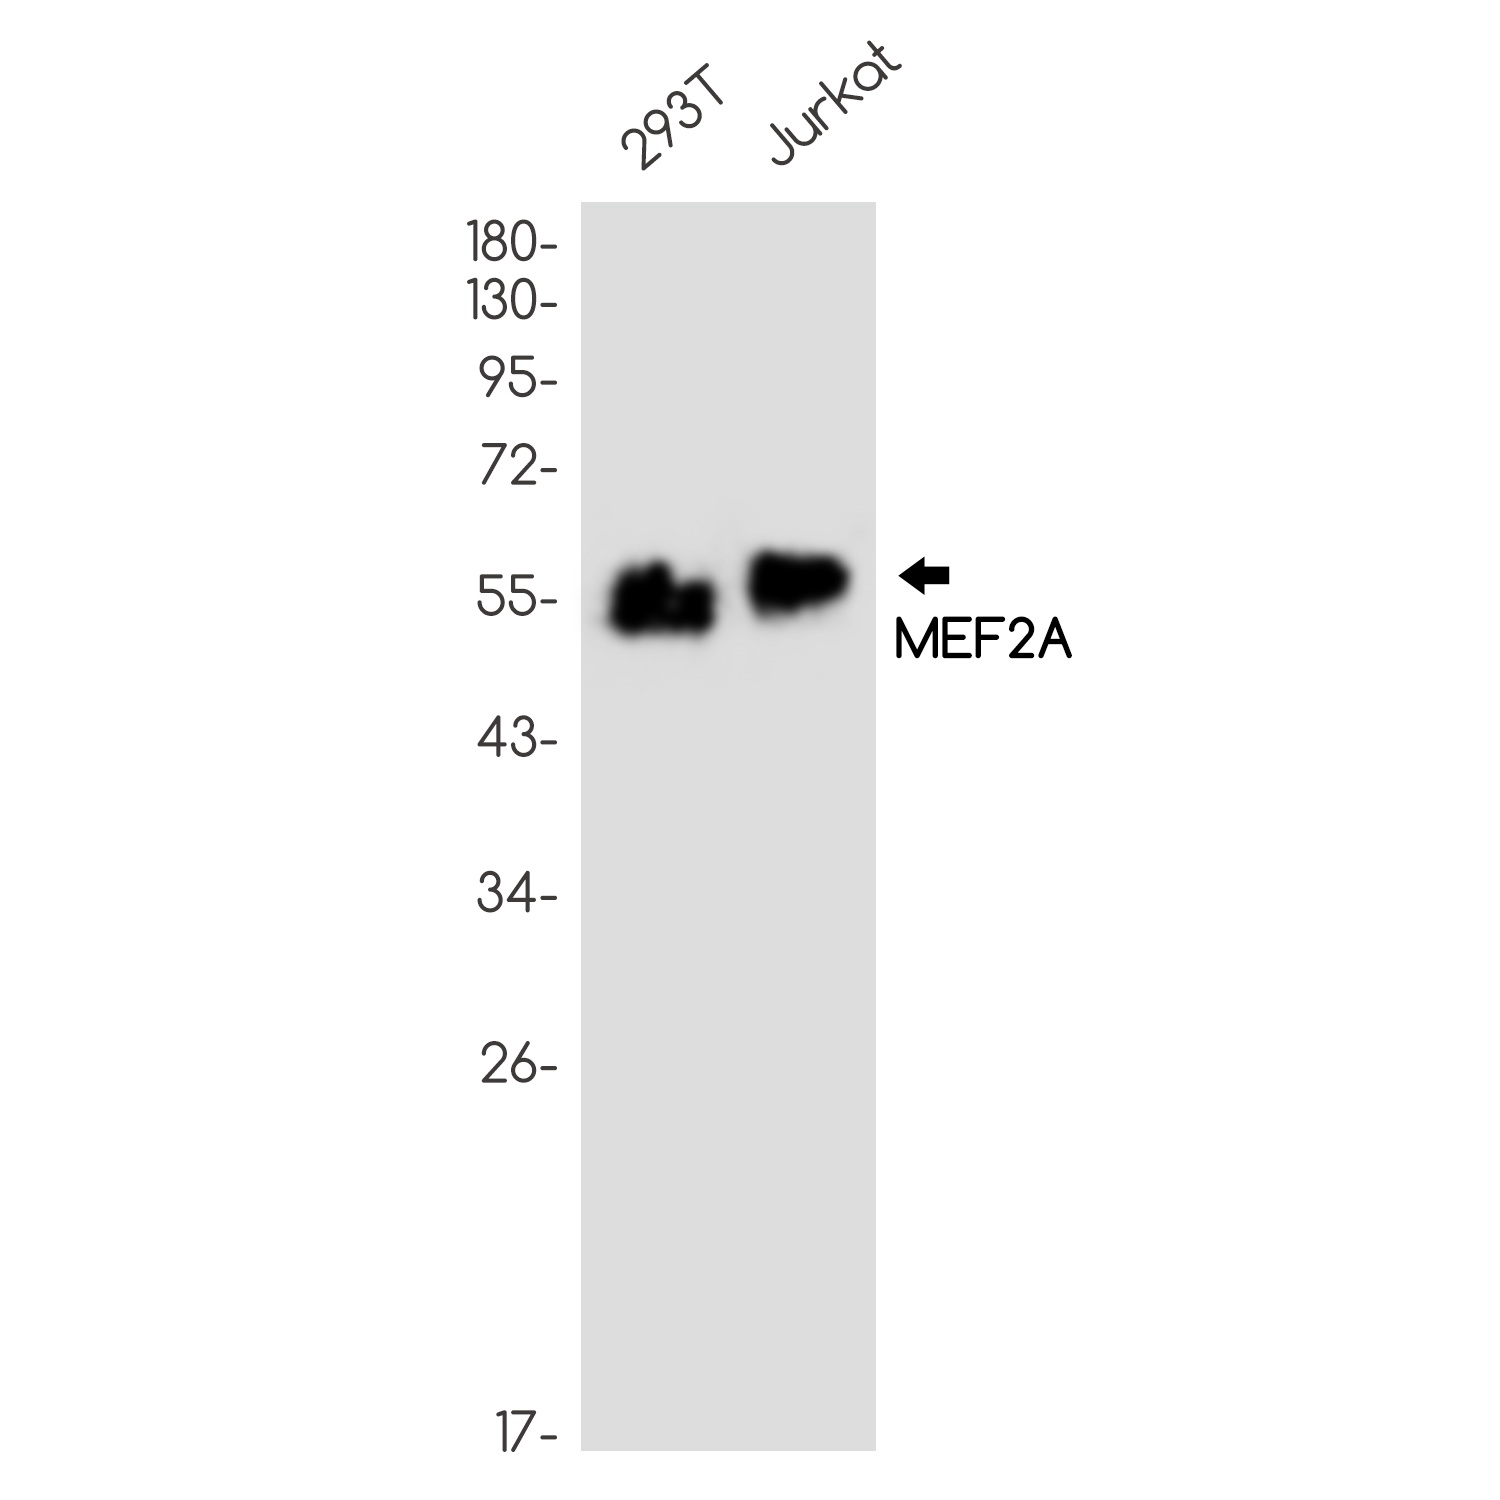 MEF2A Antibody